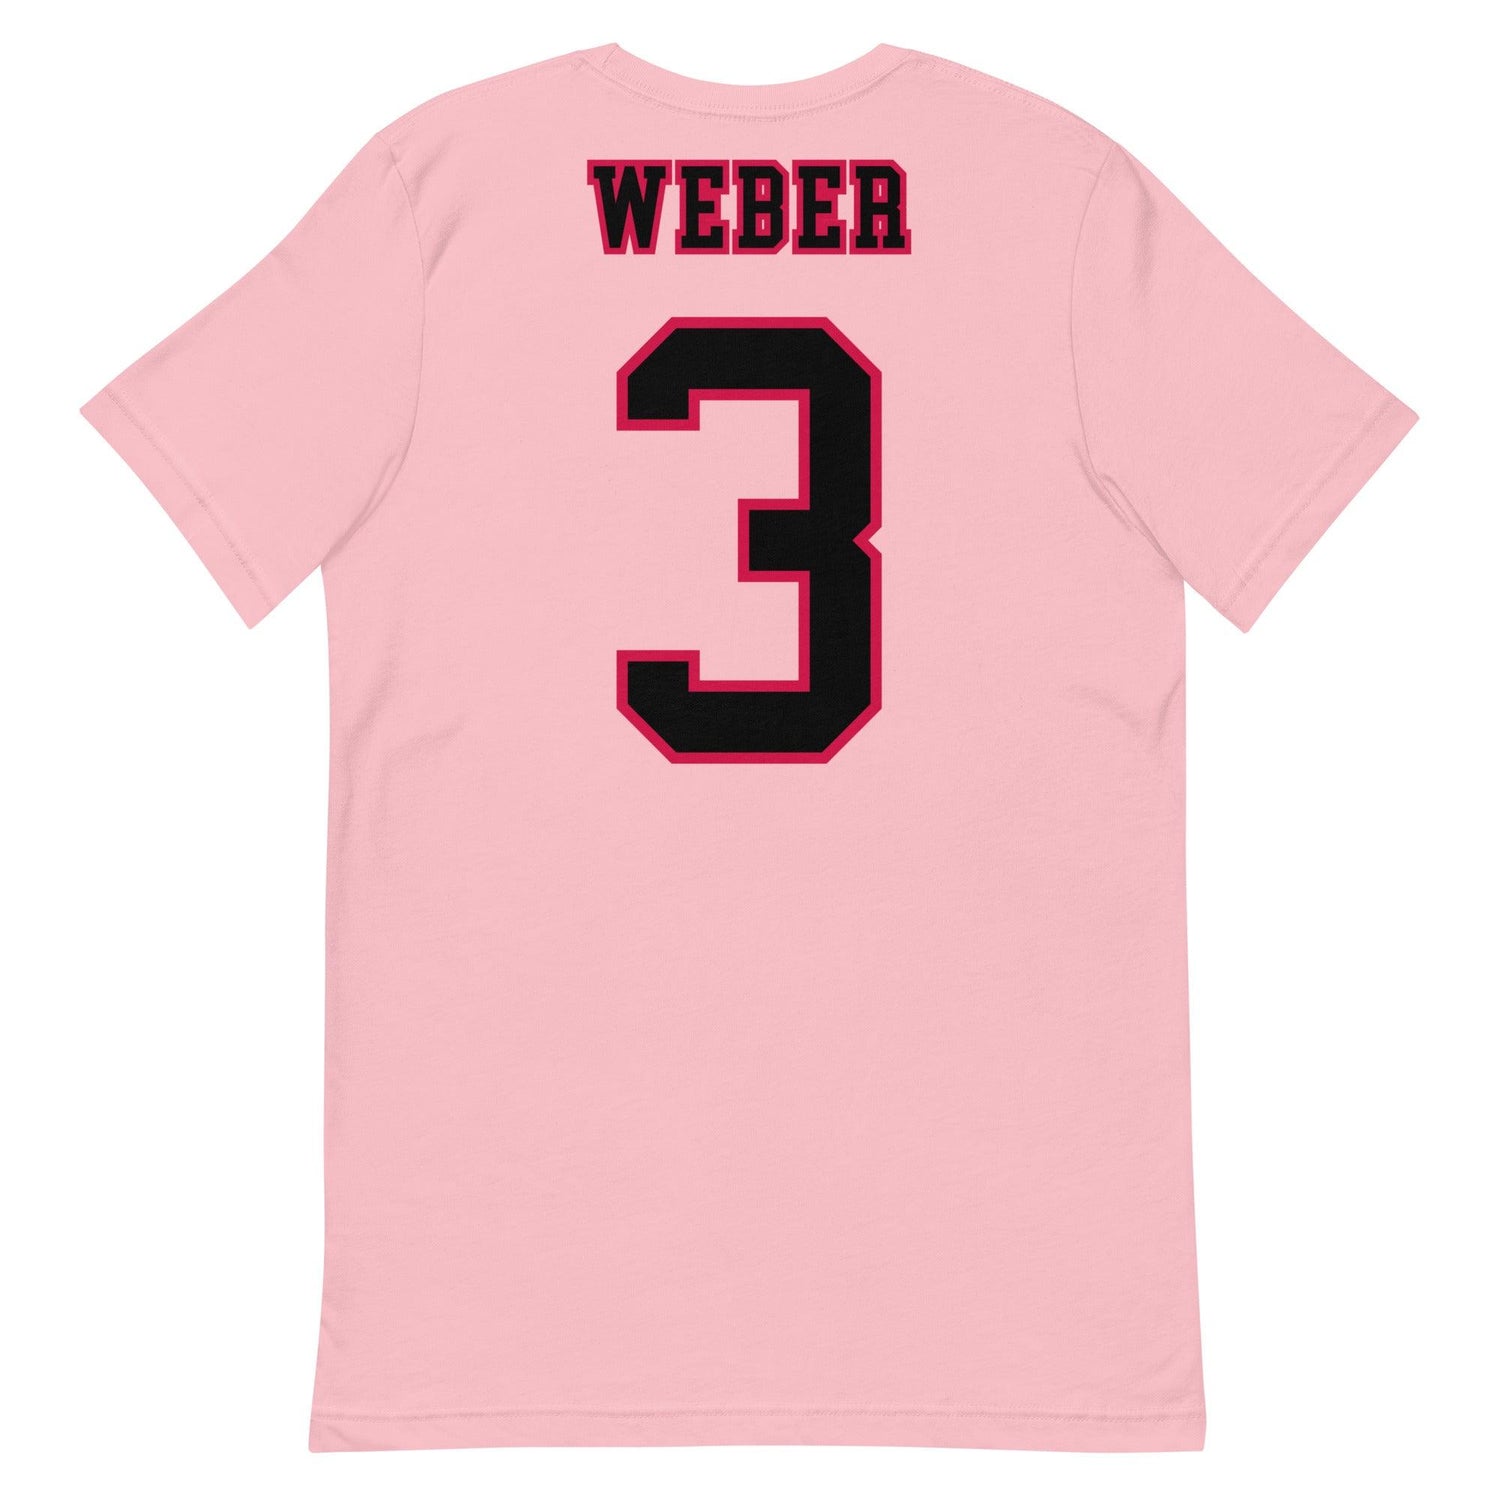 Briante Weber "Jersey" t-shirt - Fan Arch